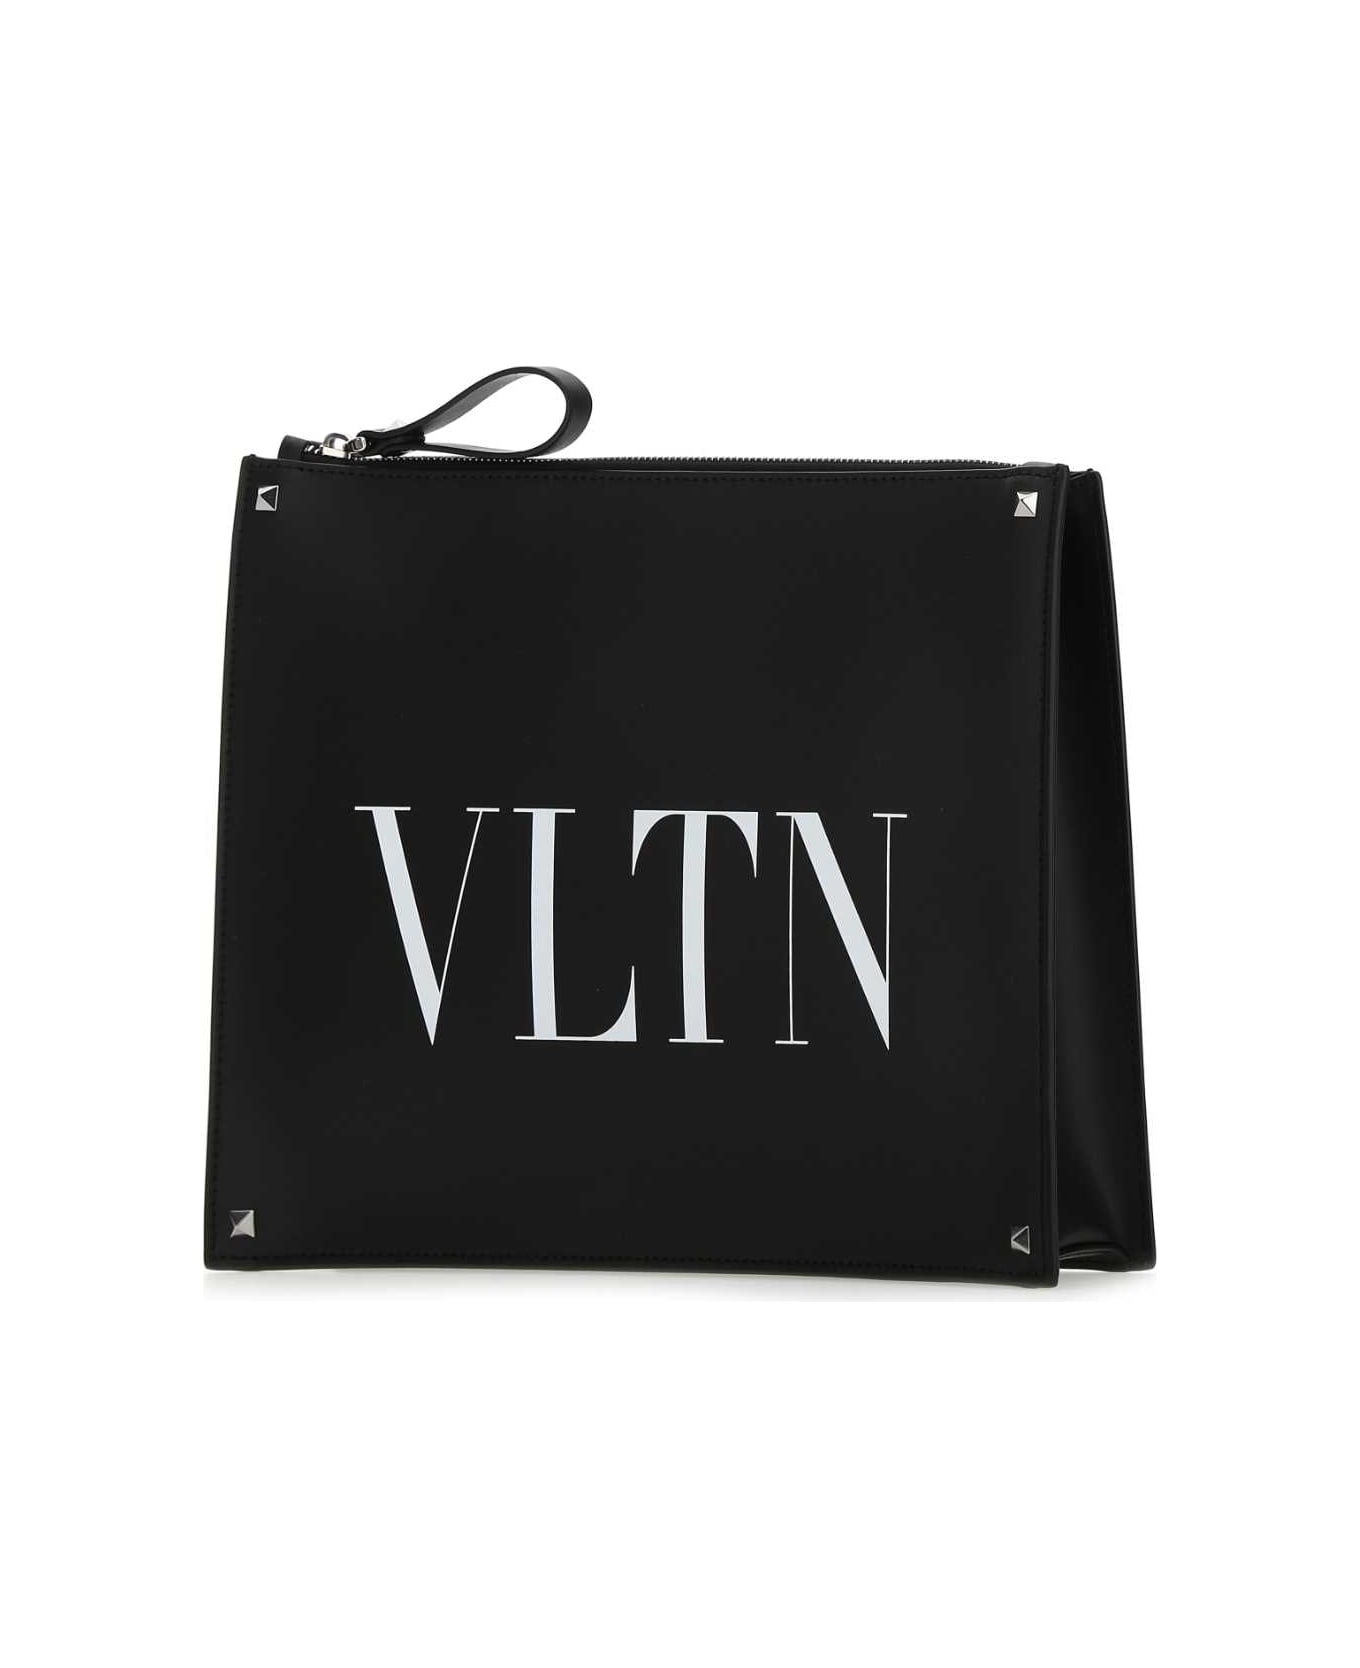 Valentino Garavani Black Leather Vltn Clutch - NEROBIANCO